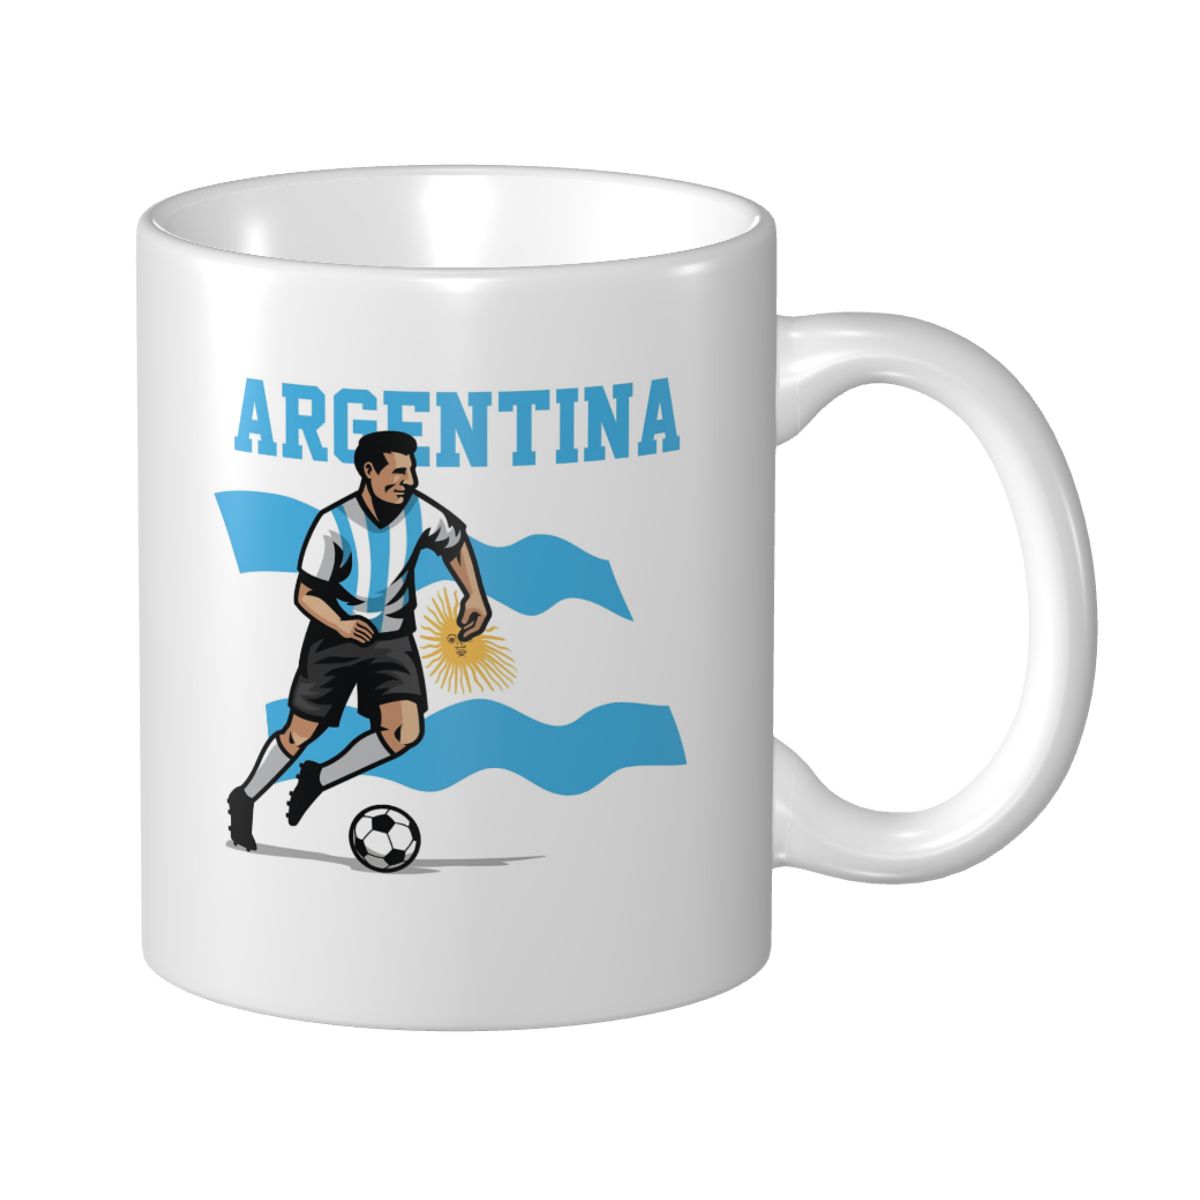 Argentina Soccer Player Ceramic Mug